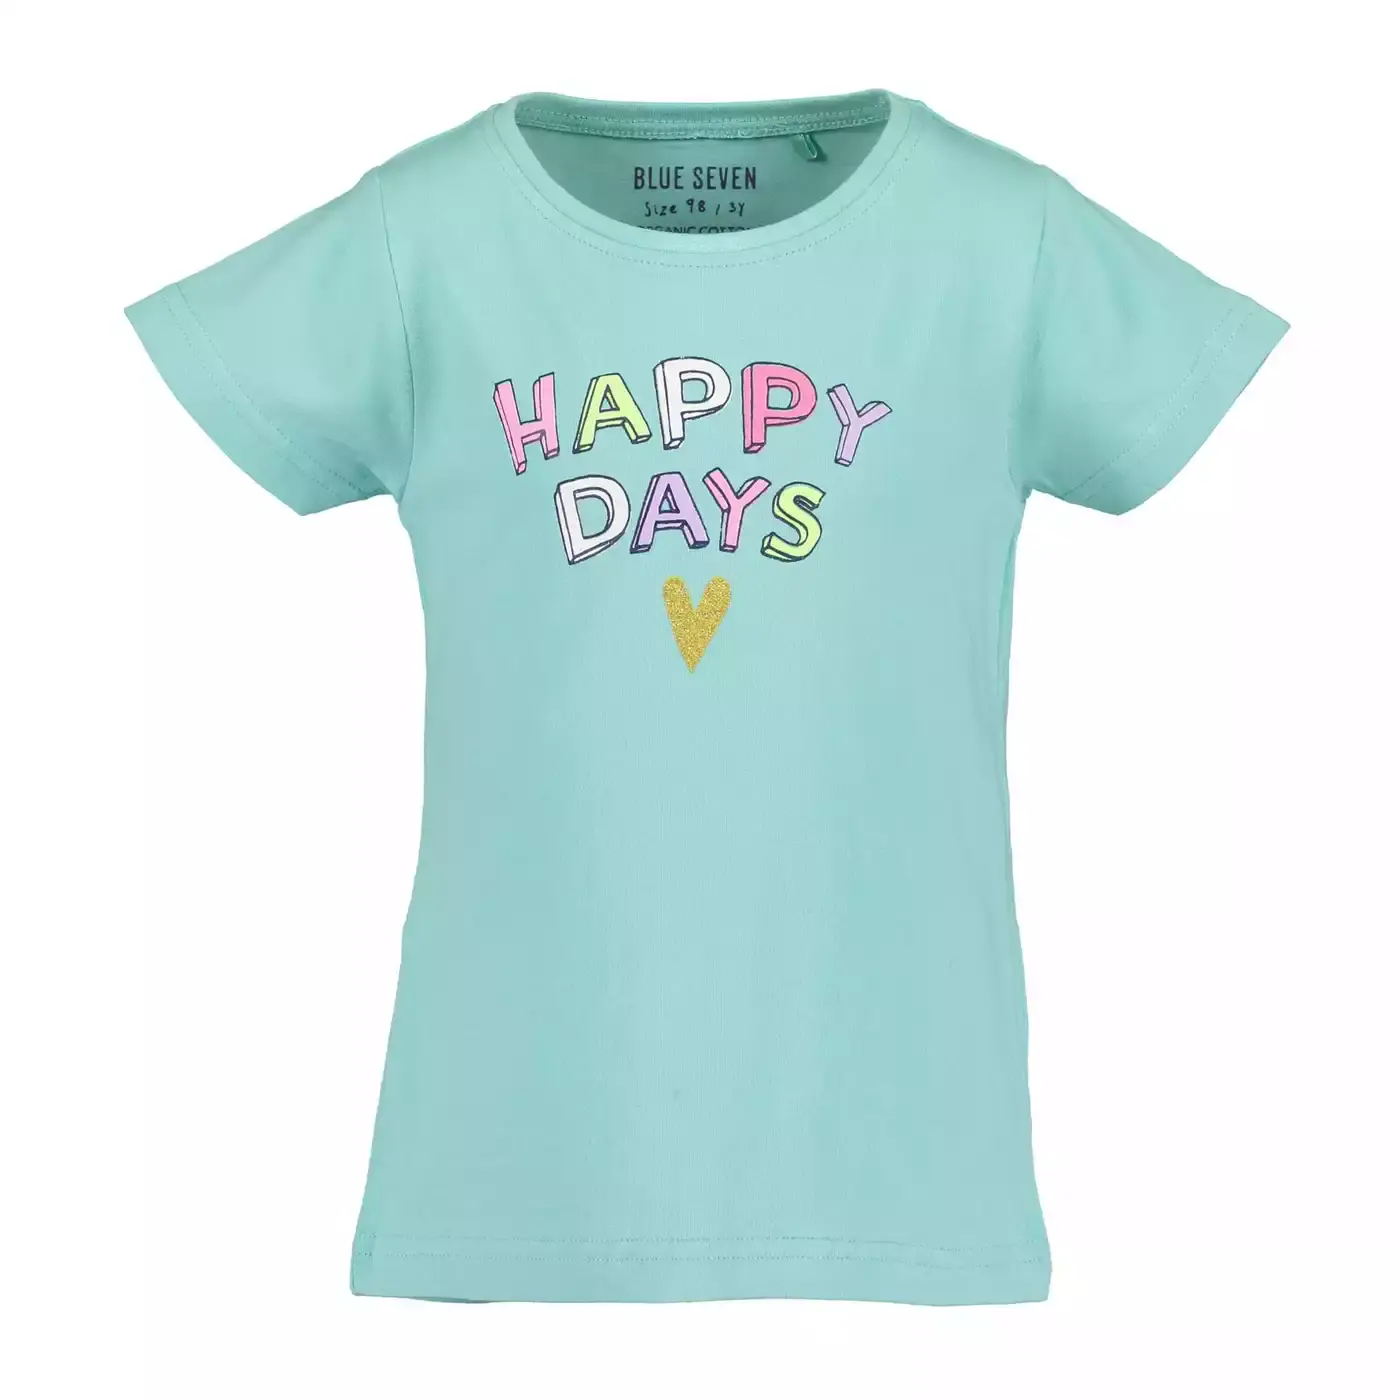 T-Shirt Happy Days blue seven Blau M2008580014804 1